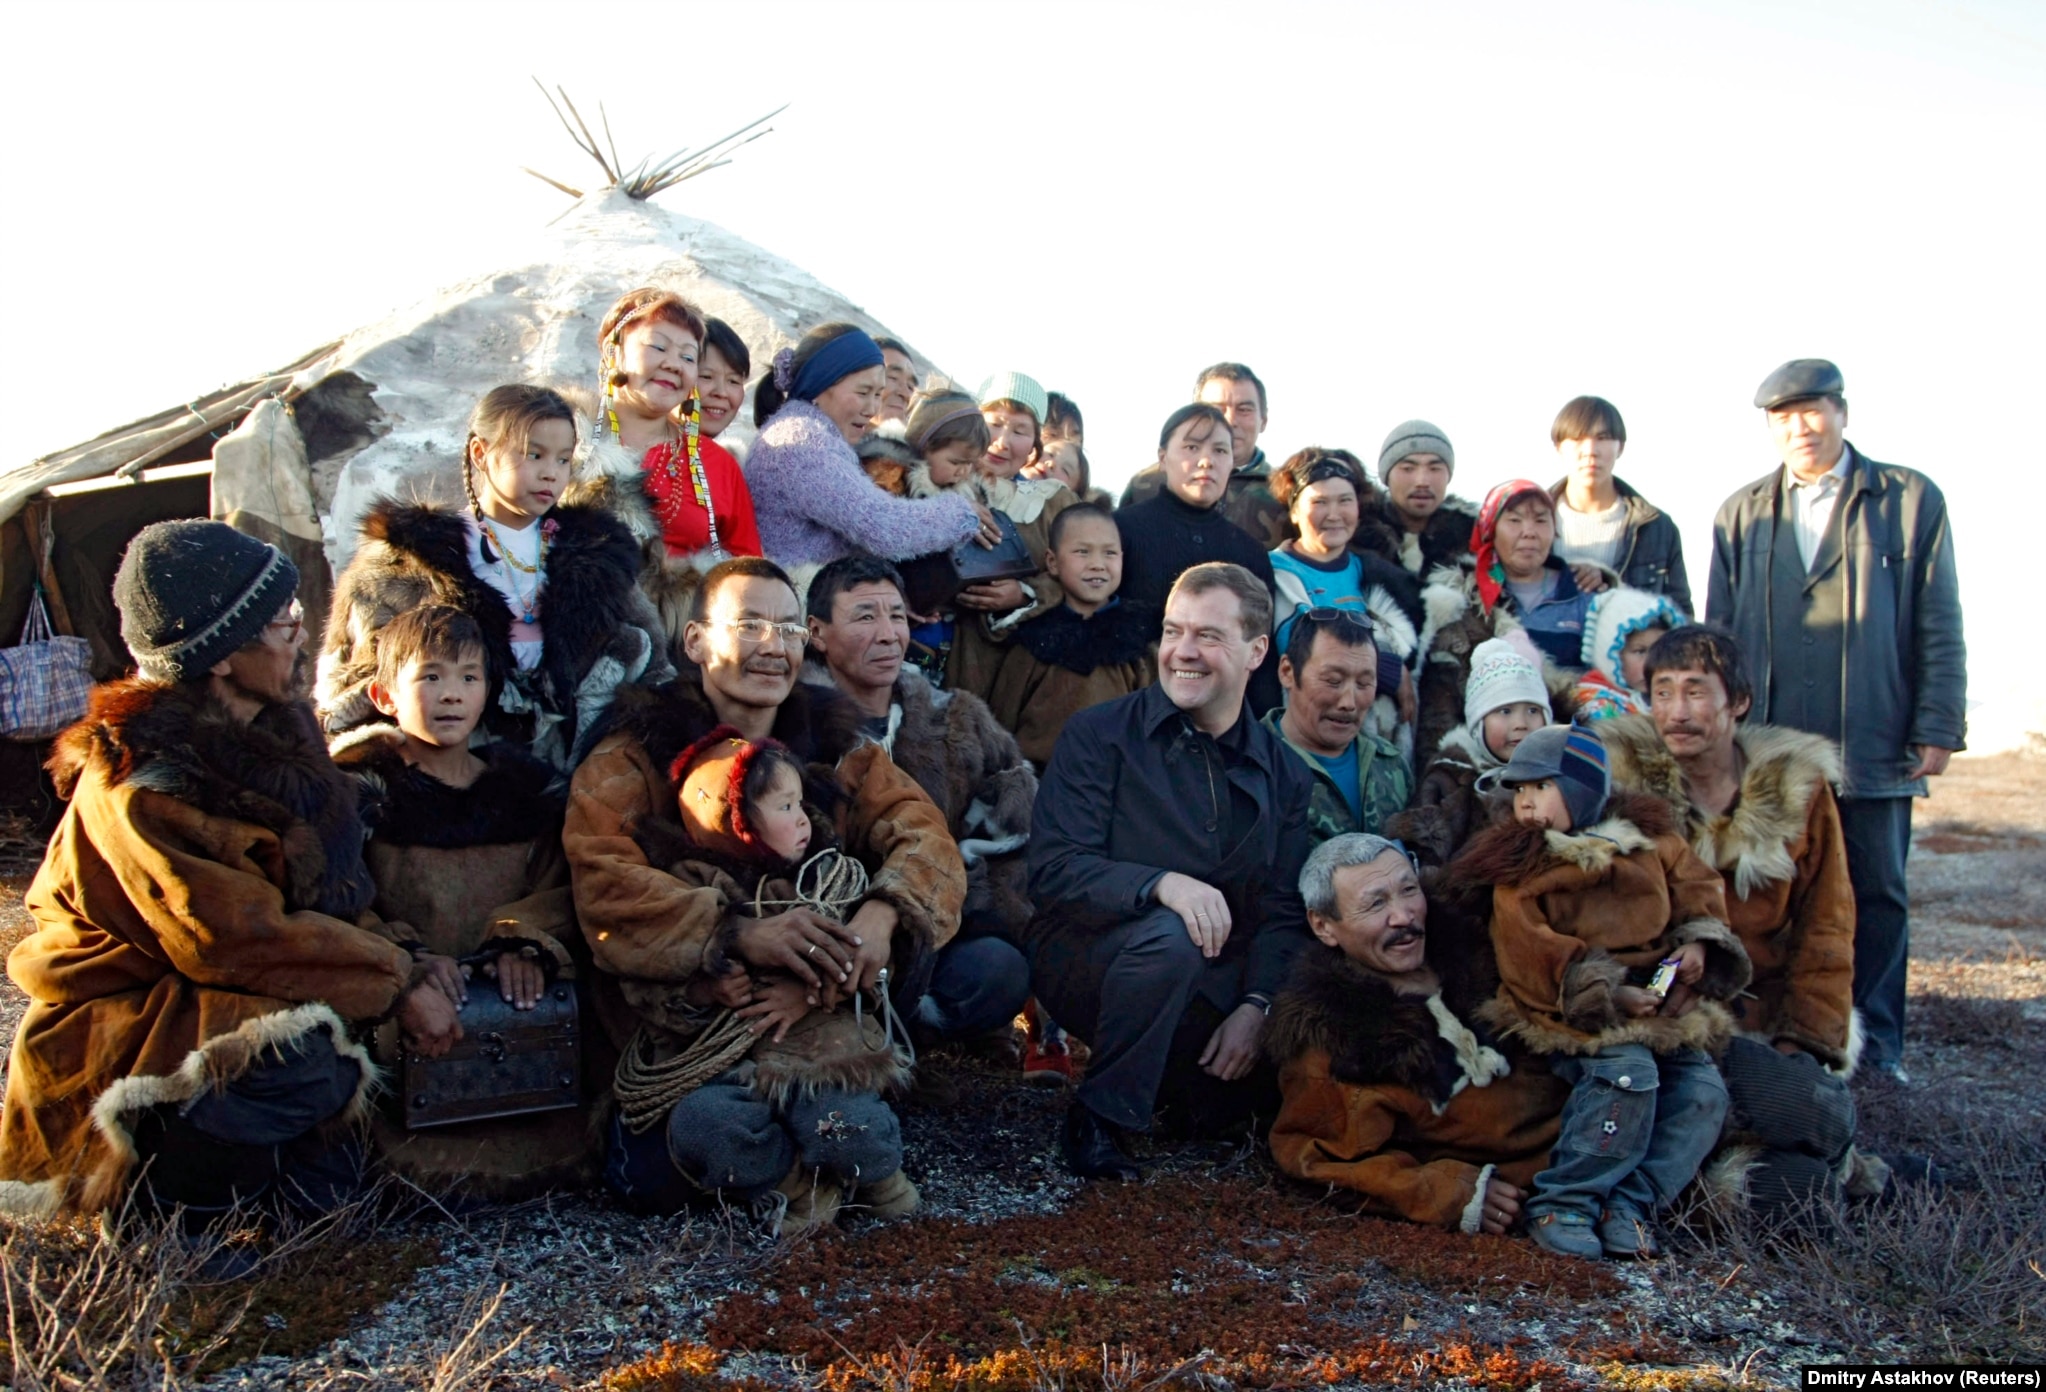 On September 23, 2008, Medvedev poses with reindeer herders in the town of Kanchalan in Russia's Chukotka region.